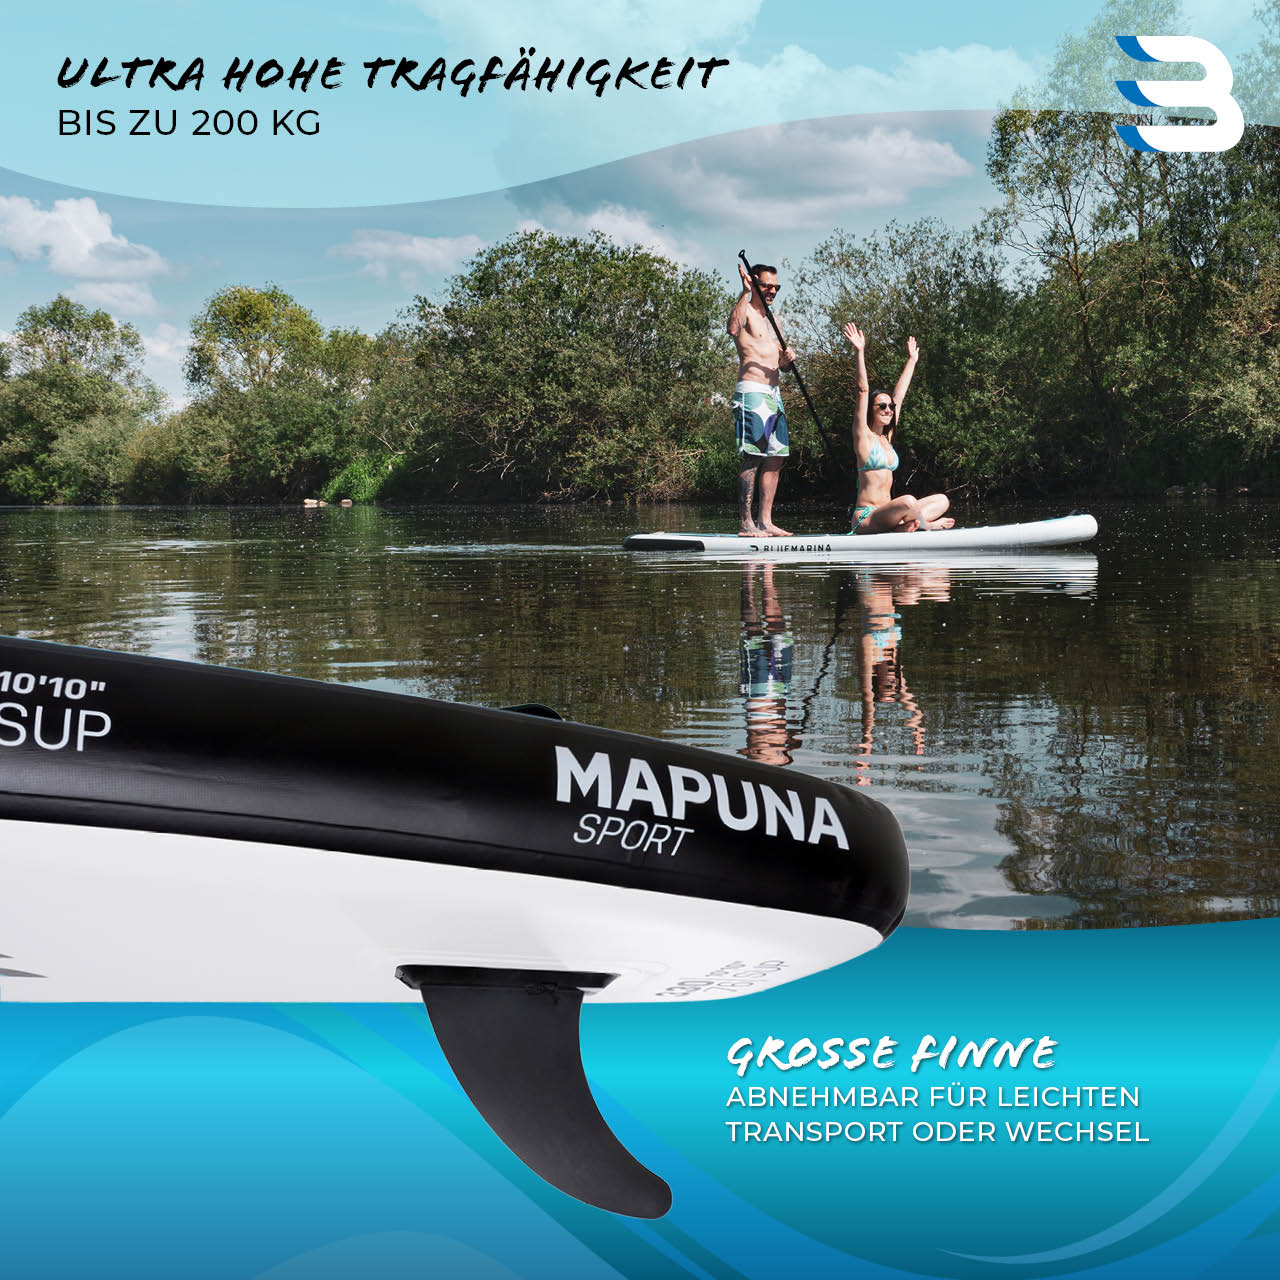 BLUEMARINA SUP Stand Board weiß schwarz 2022 Paddle, Up blau Mapuna